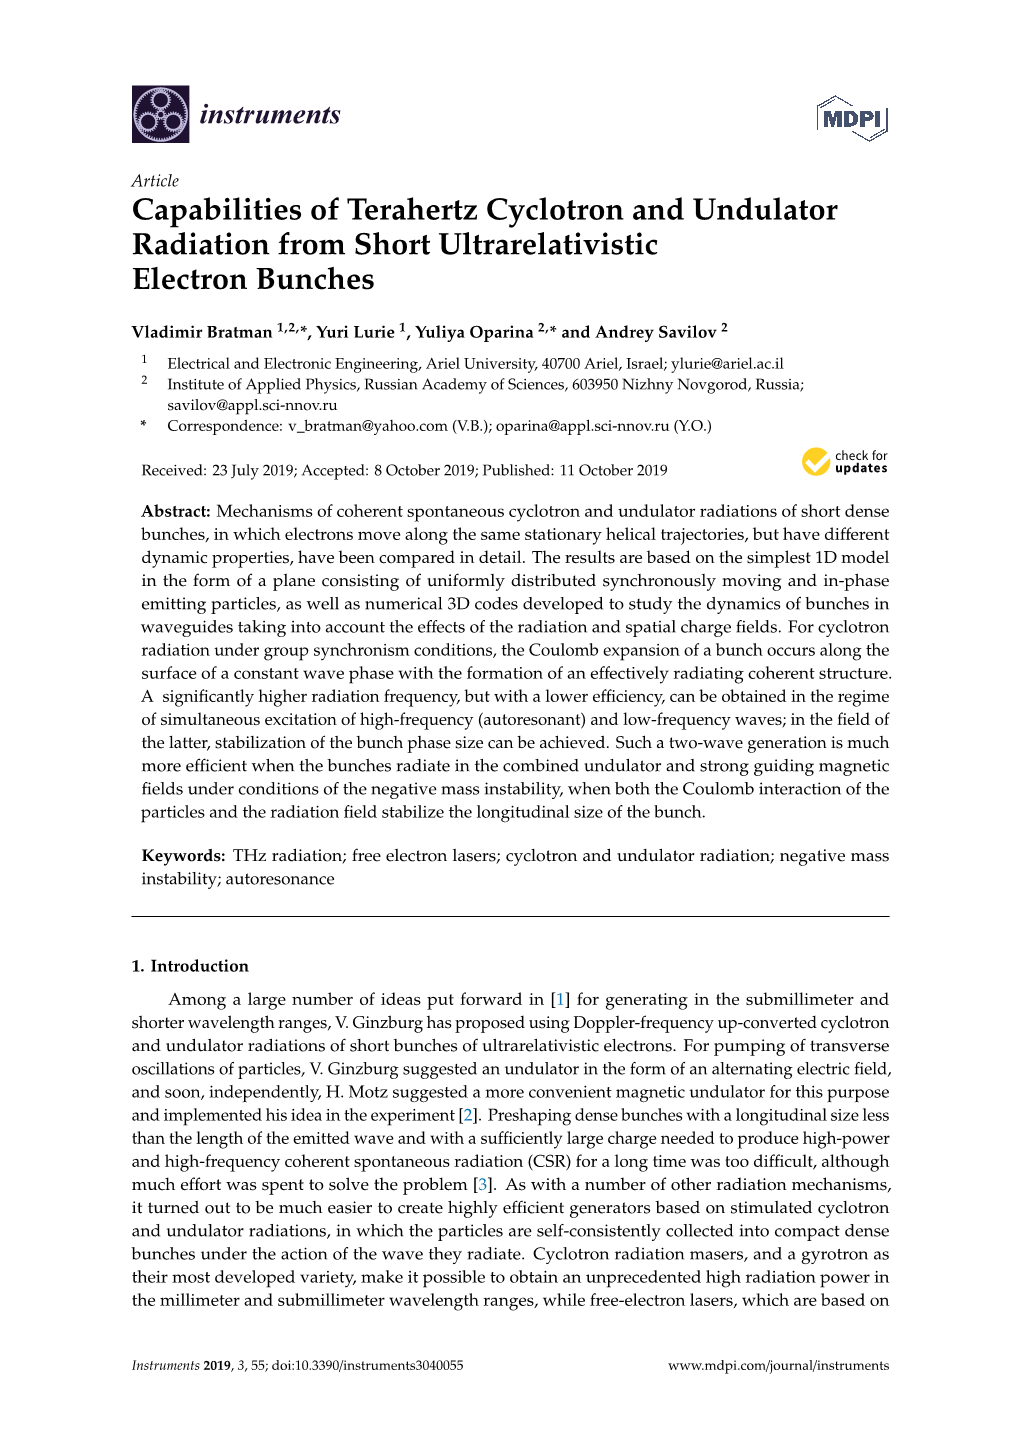 Capabilities of Terahertz Cyclotron and Undulator Radiation from Short Ultrarelativistic Electron Bunches